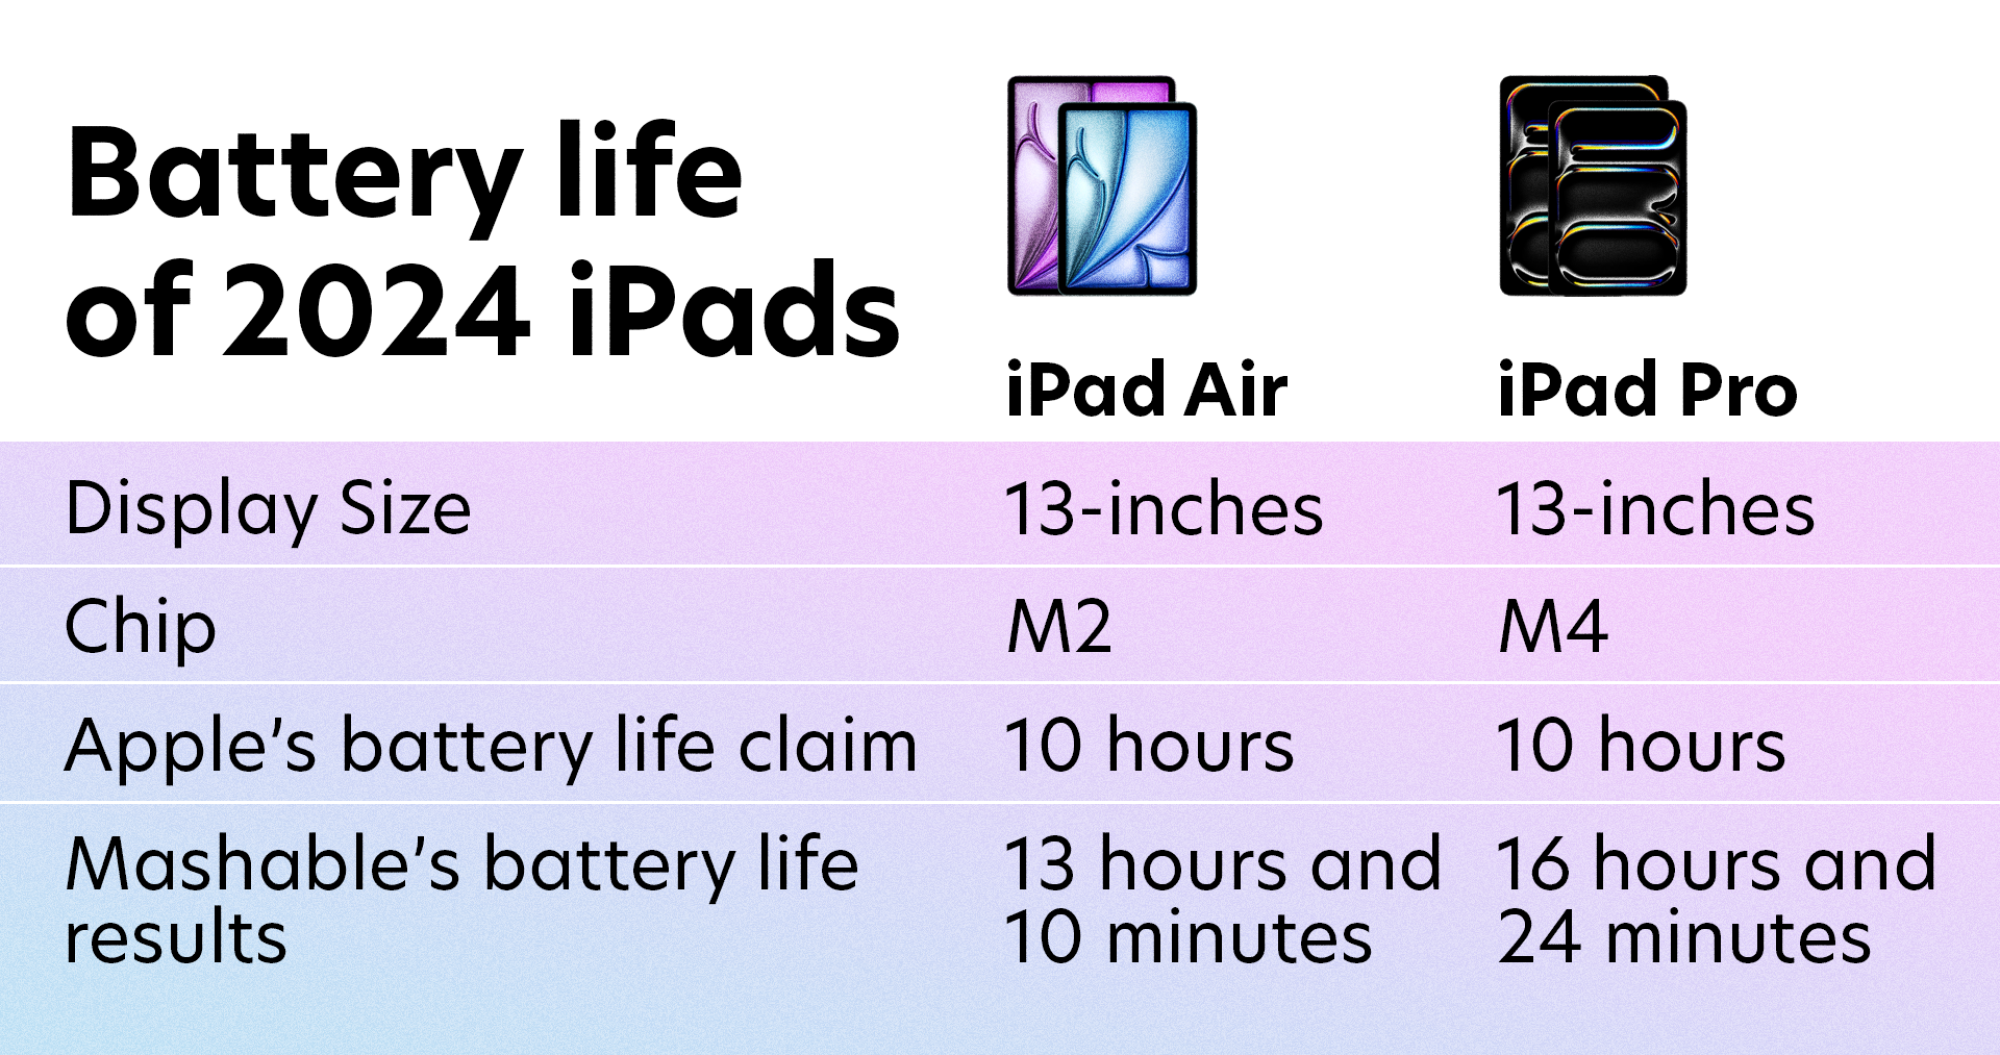 Mashable battery life chart for iPad Pro and iPad Air